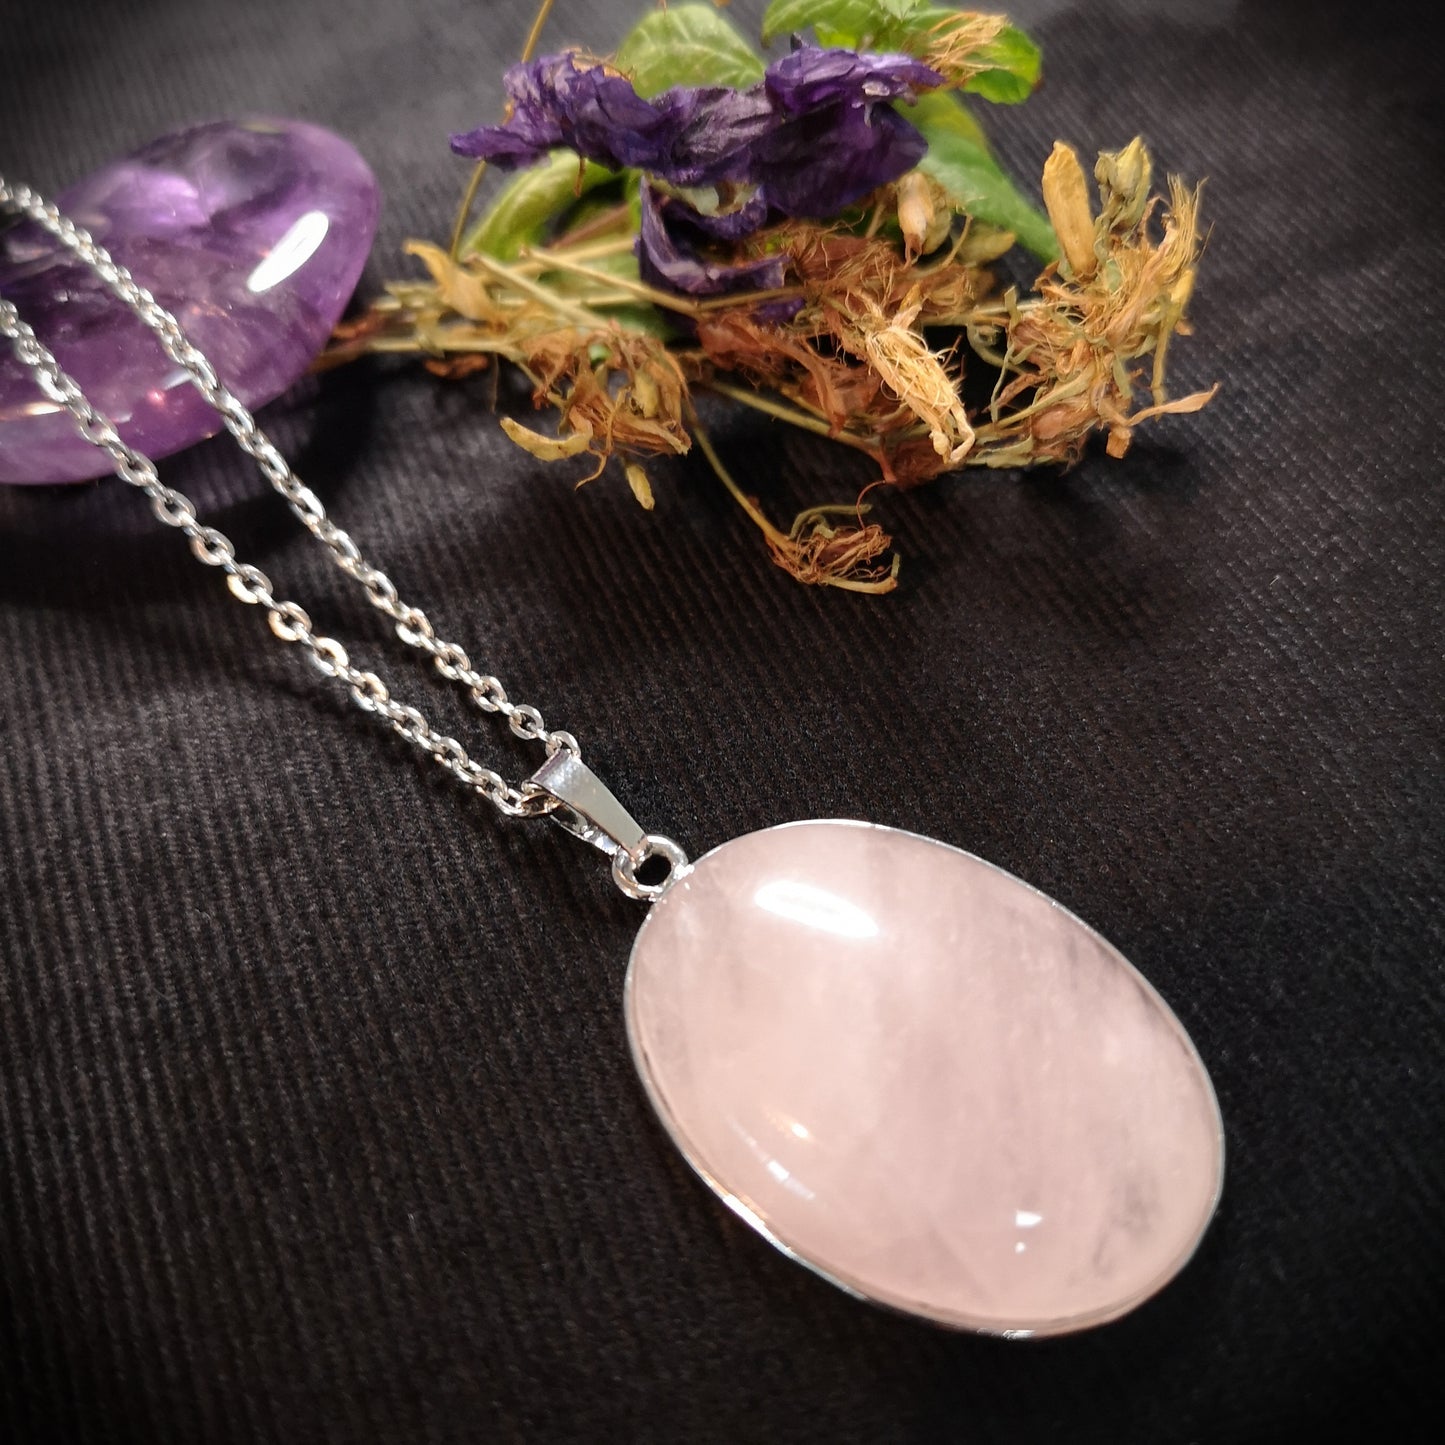 Big rose quartz gemstone necklace - The French Witch shop